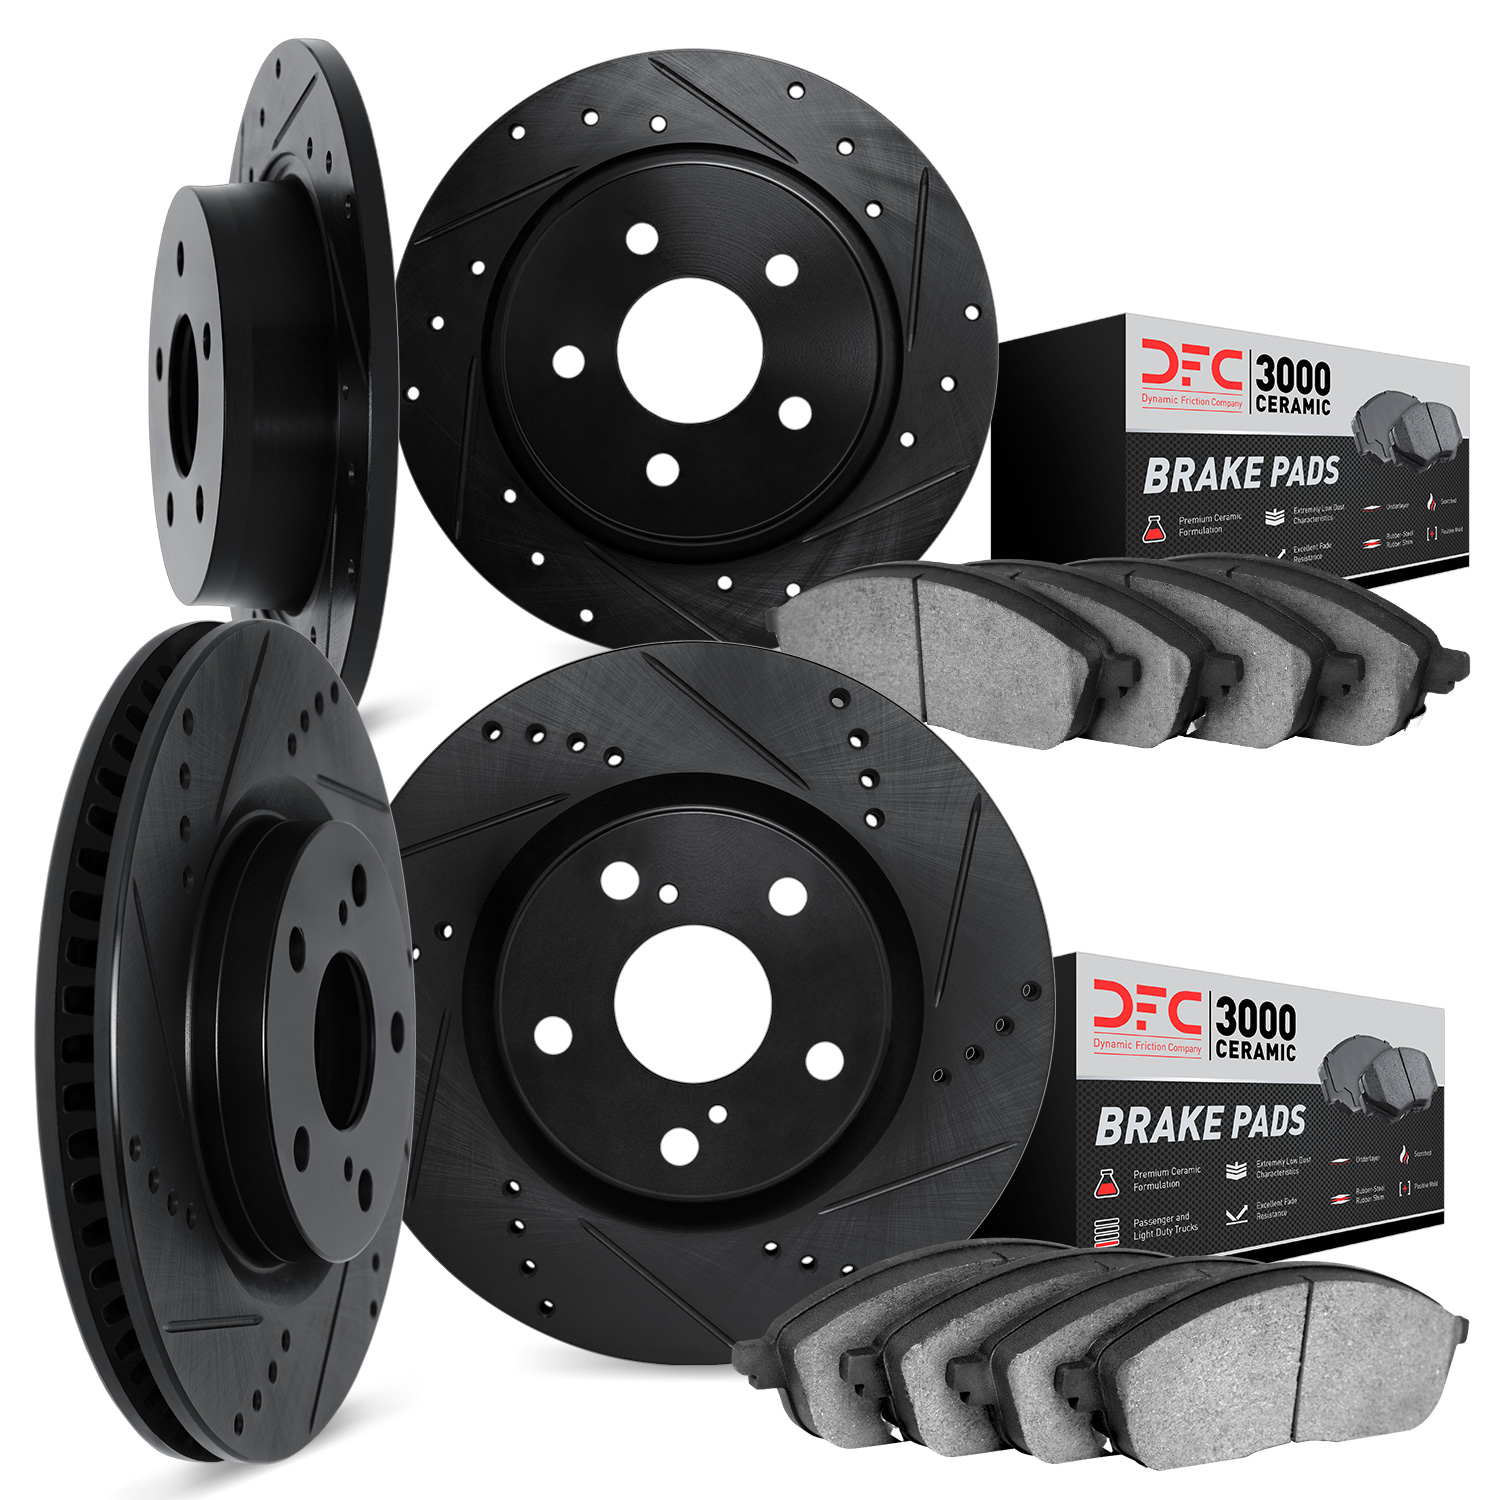 8304-80030 Drilled/Slotted Brake Rotors with 3000-Series Ceramic Brake Pads Kit [Black], 2006-2015 Ford/Lincoln/Mercury/Mazda, P